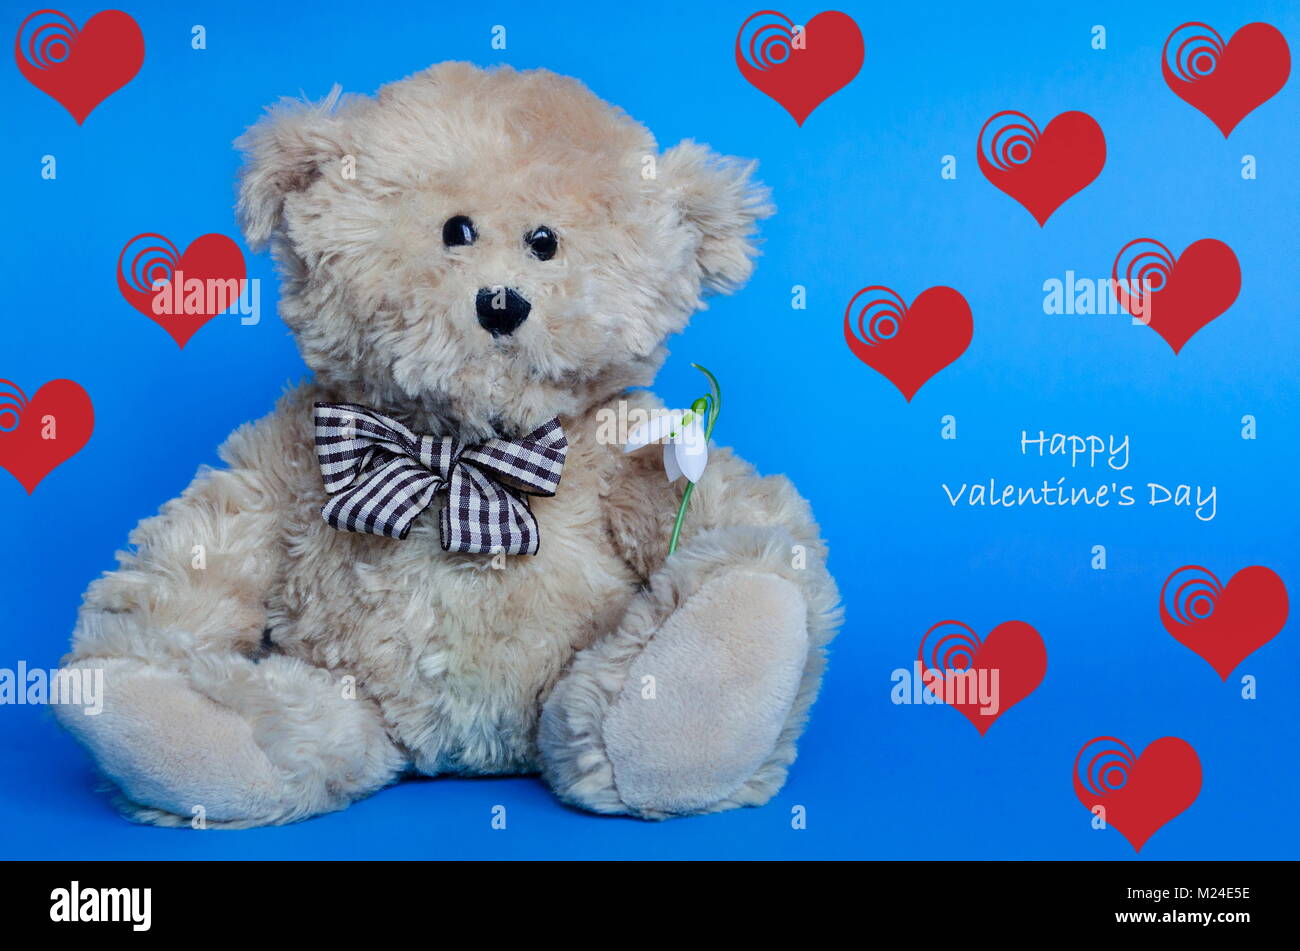 happy valentines day teddy